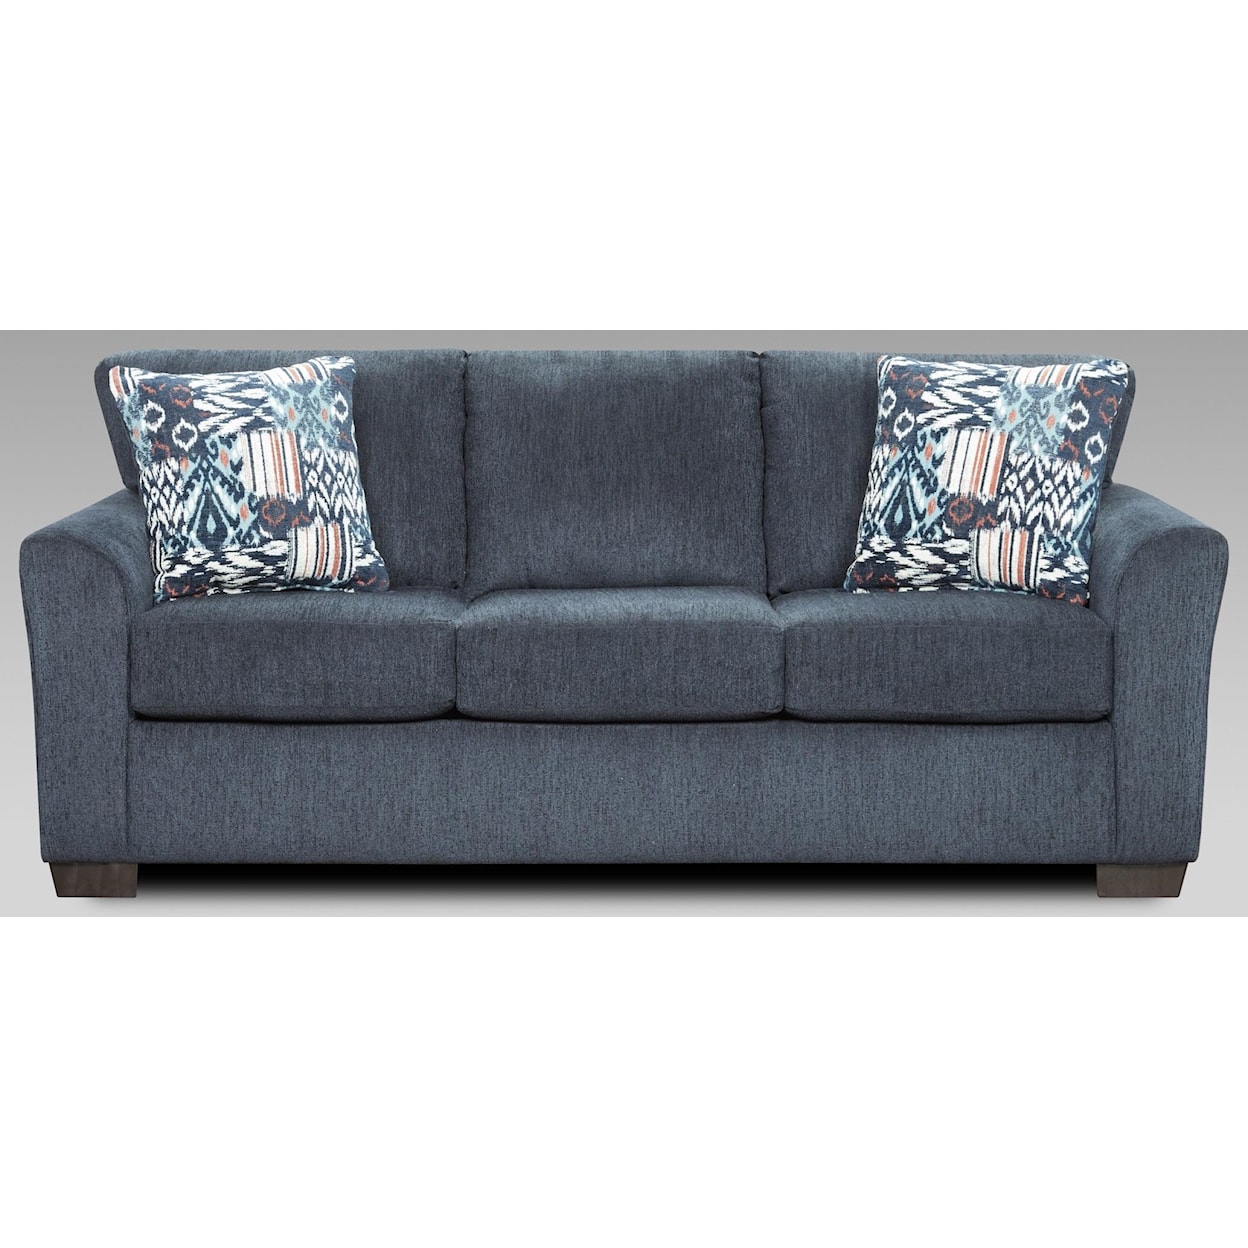 Affordable Furniture 3333 3333 Navy Sleeper Sofa